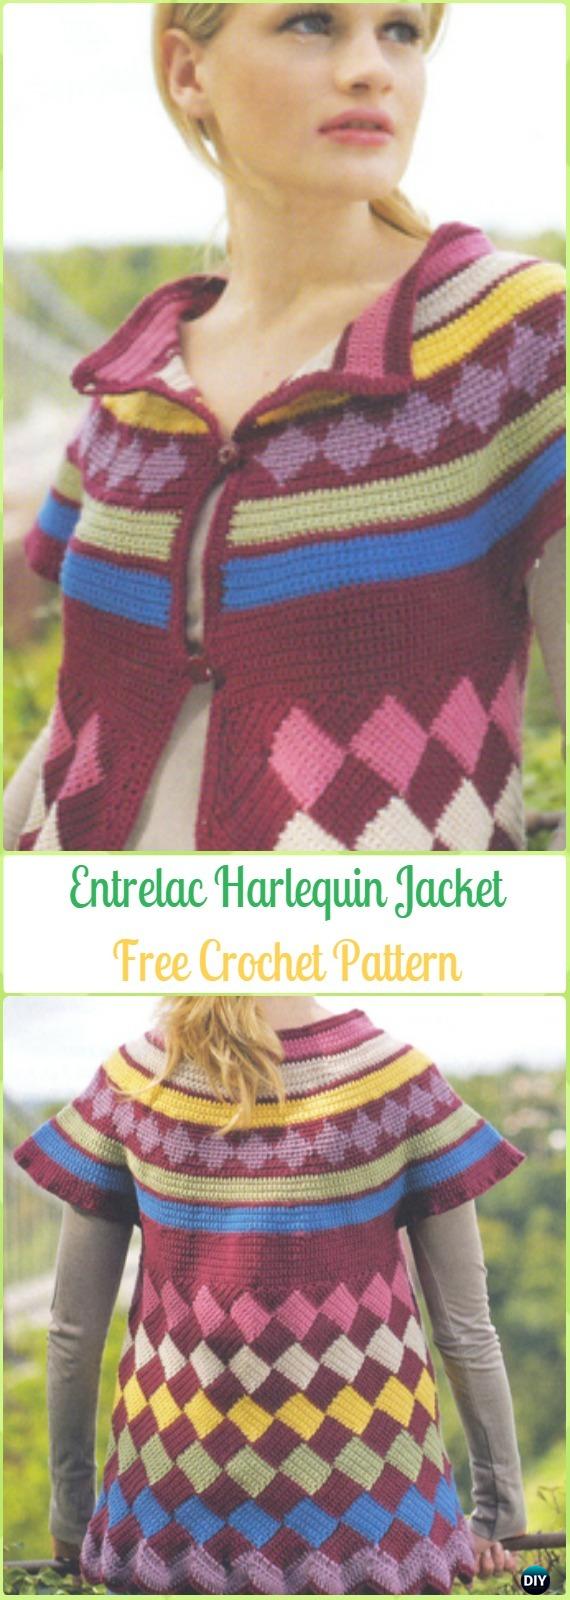 Crochet Entrelac Harlequin Jacket Free Pattern - Crochet Women Sweater Coat & Cardigan Free Patterns